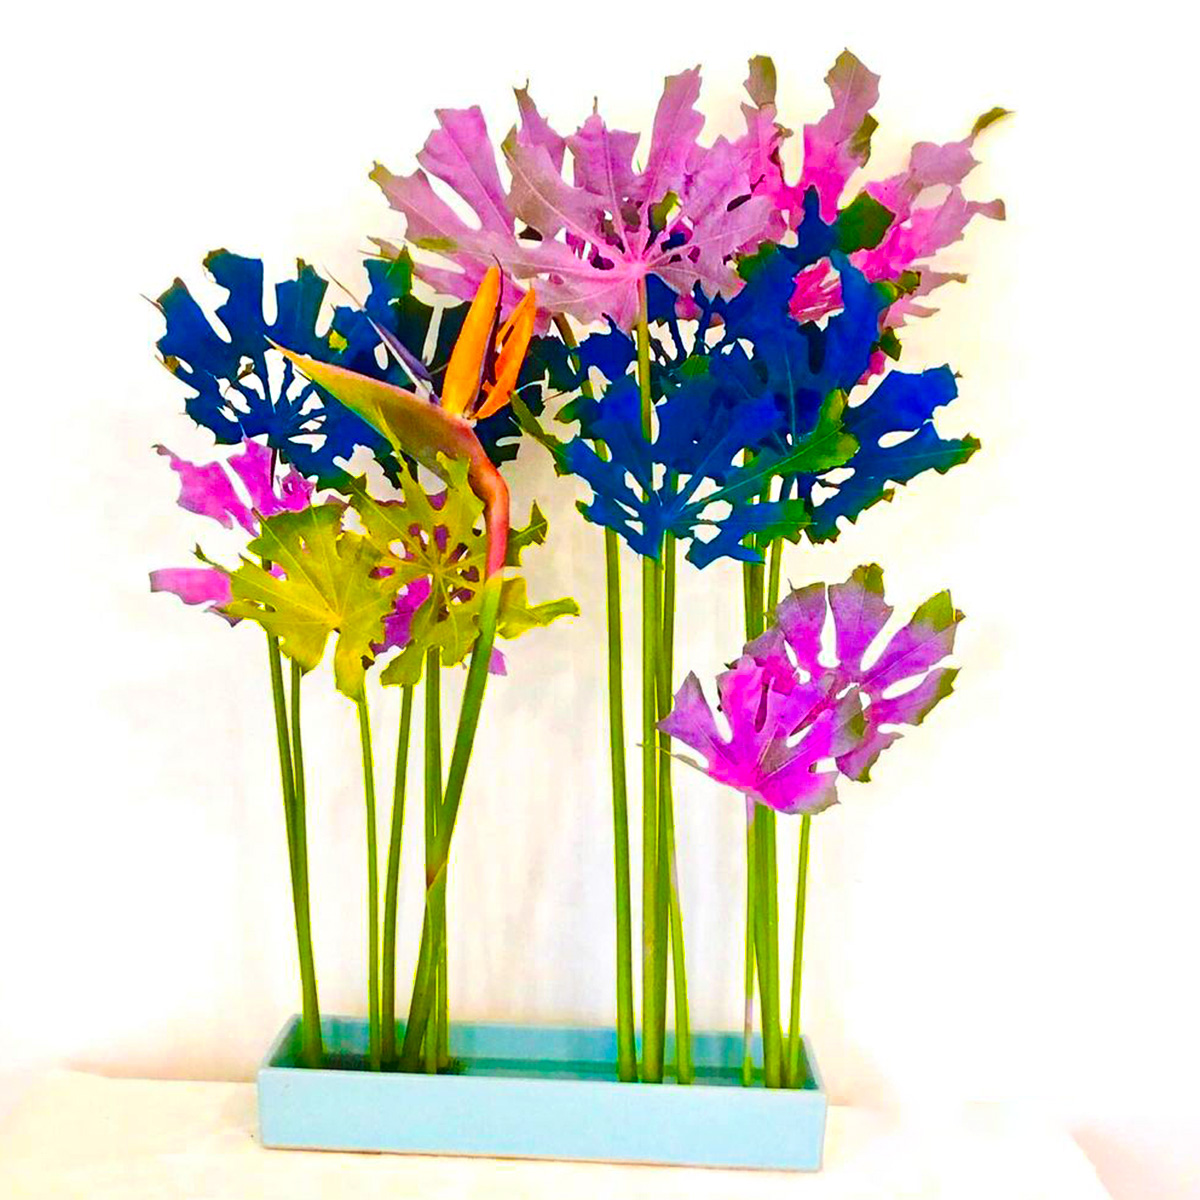 Toula Karanikolopoulos Shows How Ikebana Is the Art of Flower Arrangement 03